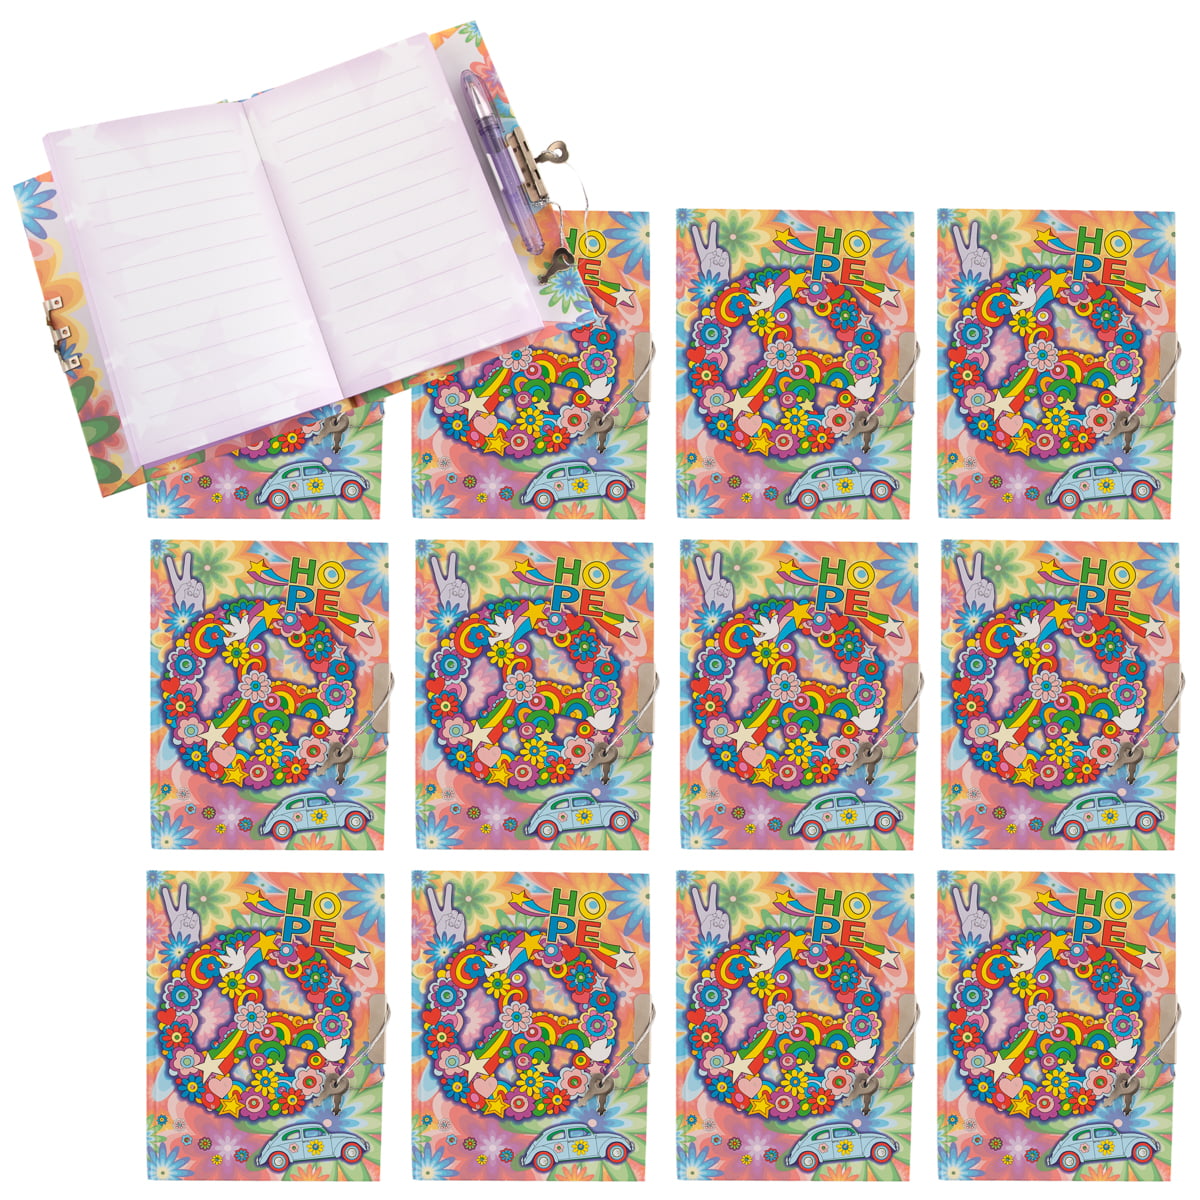 Hardcover 11 Designs Peaceable Kingdom Top Secret Diaries with Lock & Key 